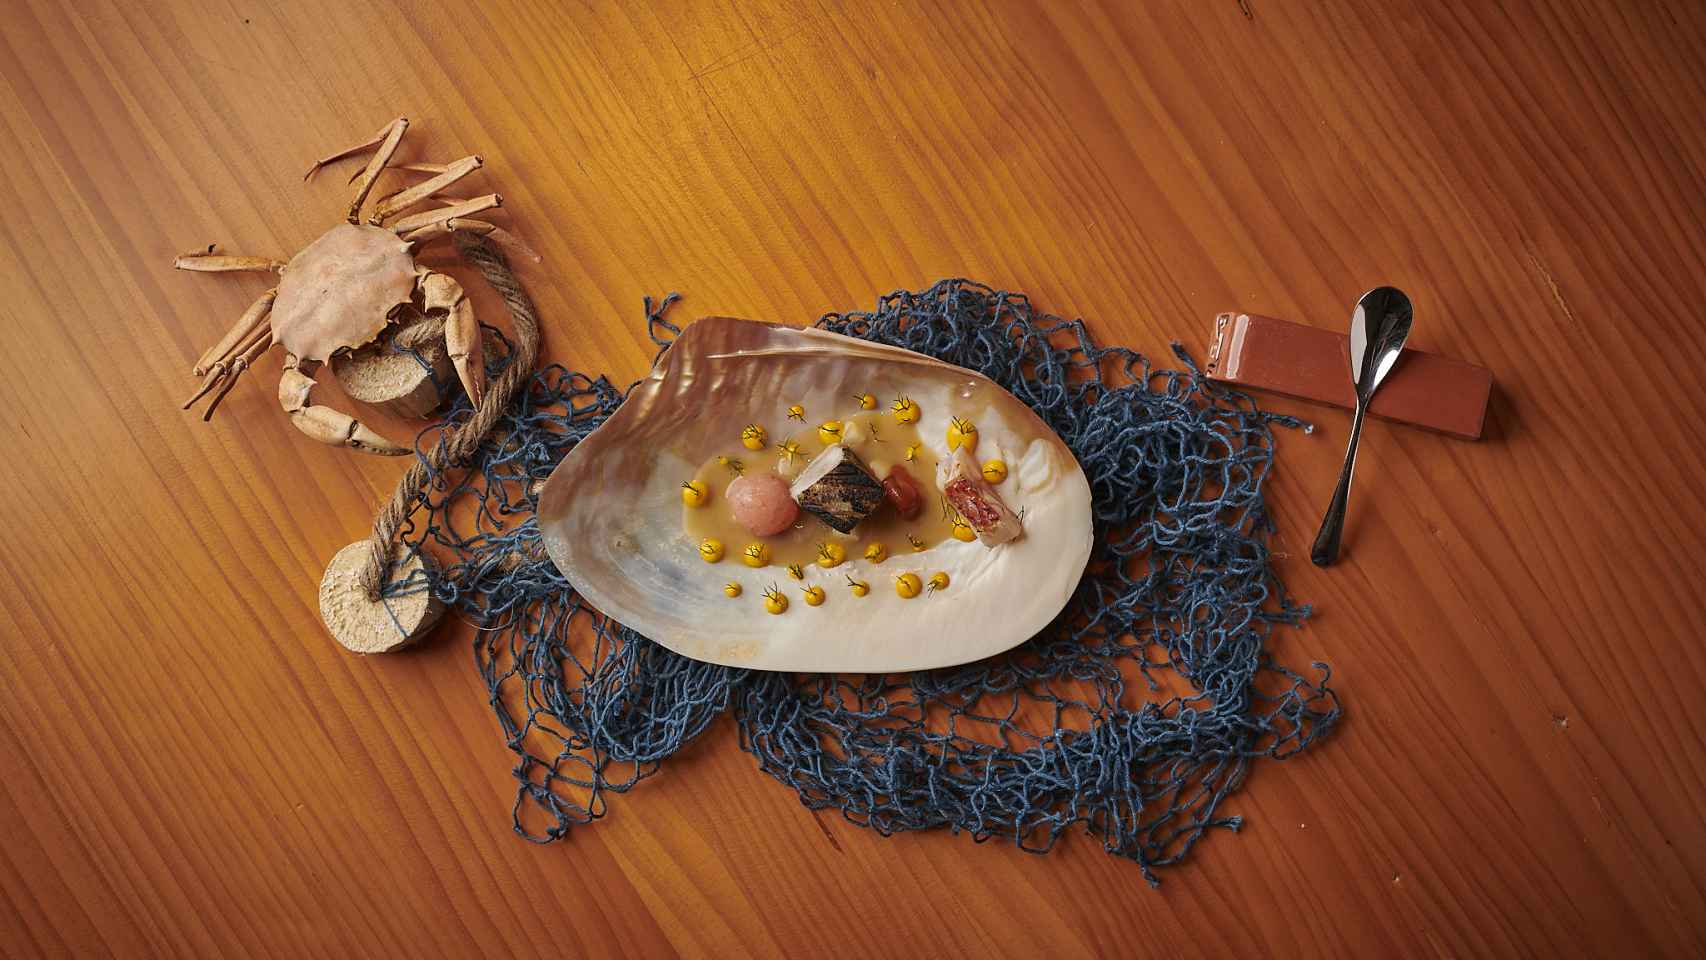 Arte en el plato a través de una receta ancestral como es el Bullit de peix.